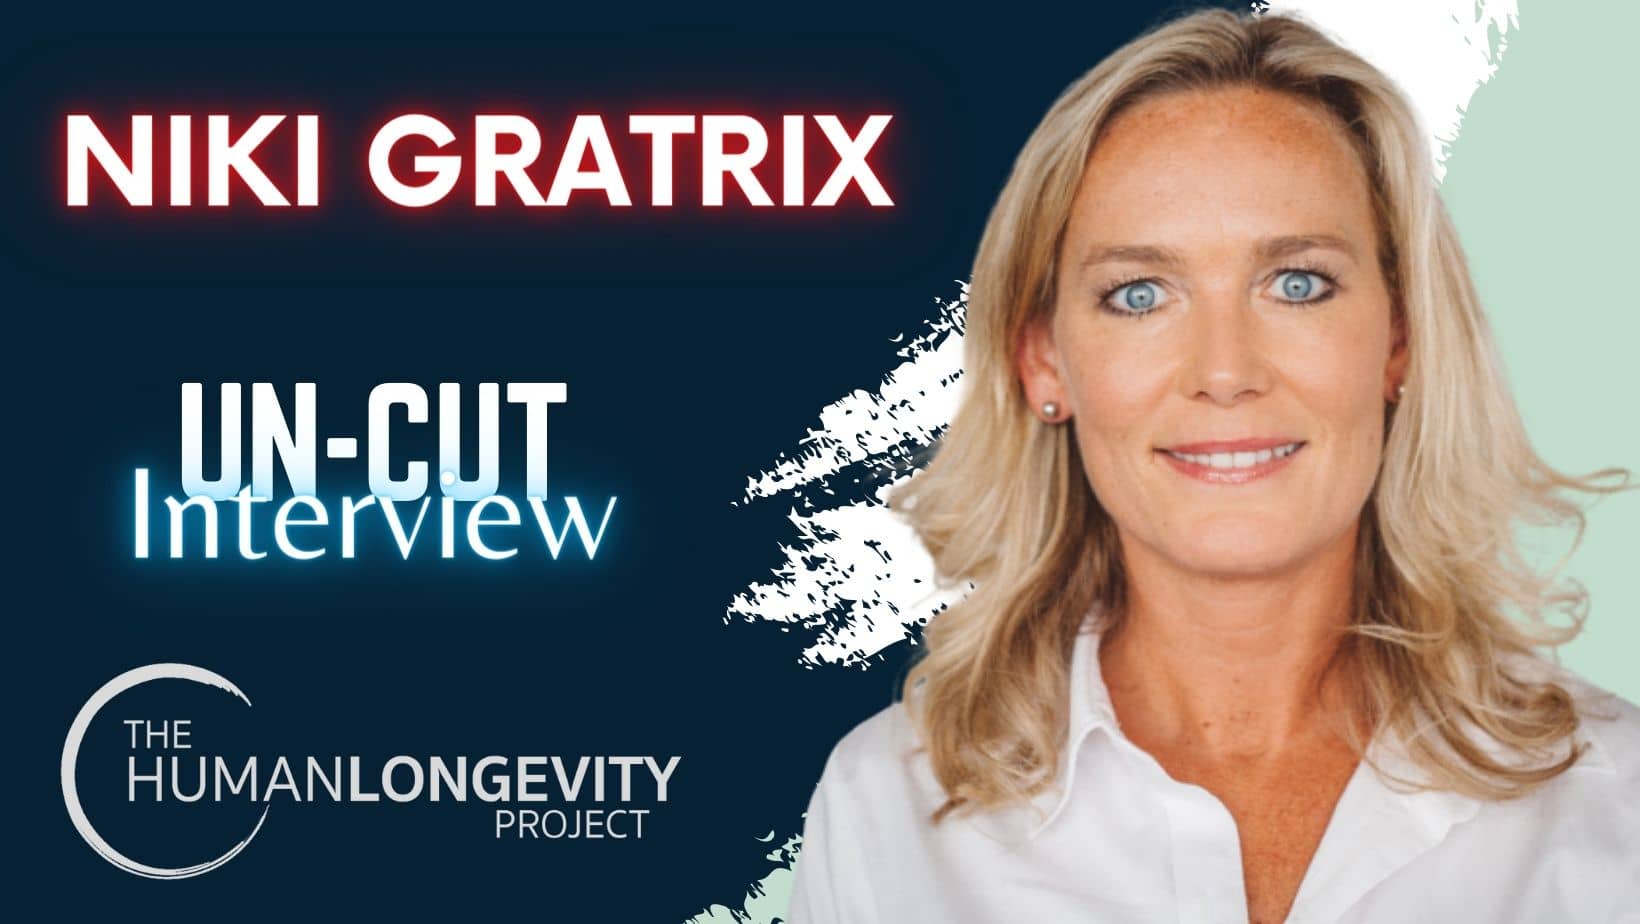 Human Longevity Project Uncut Interview With Niki Gratrix